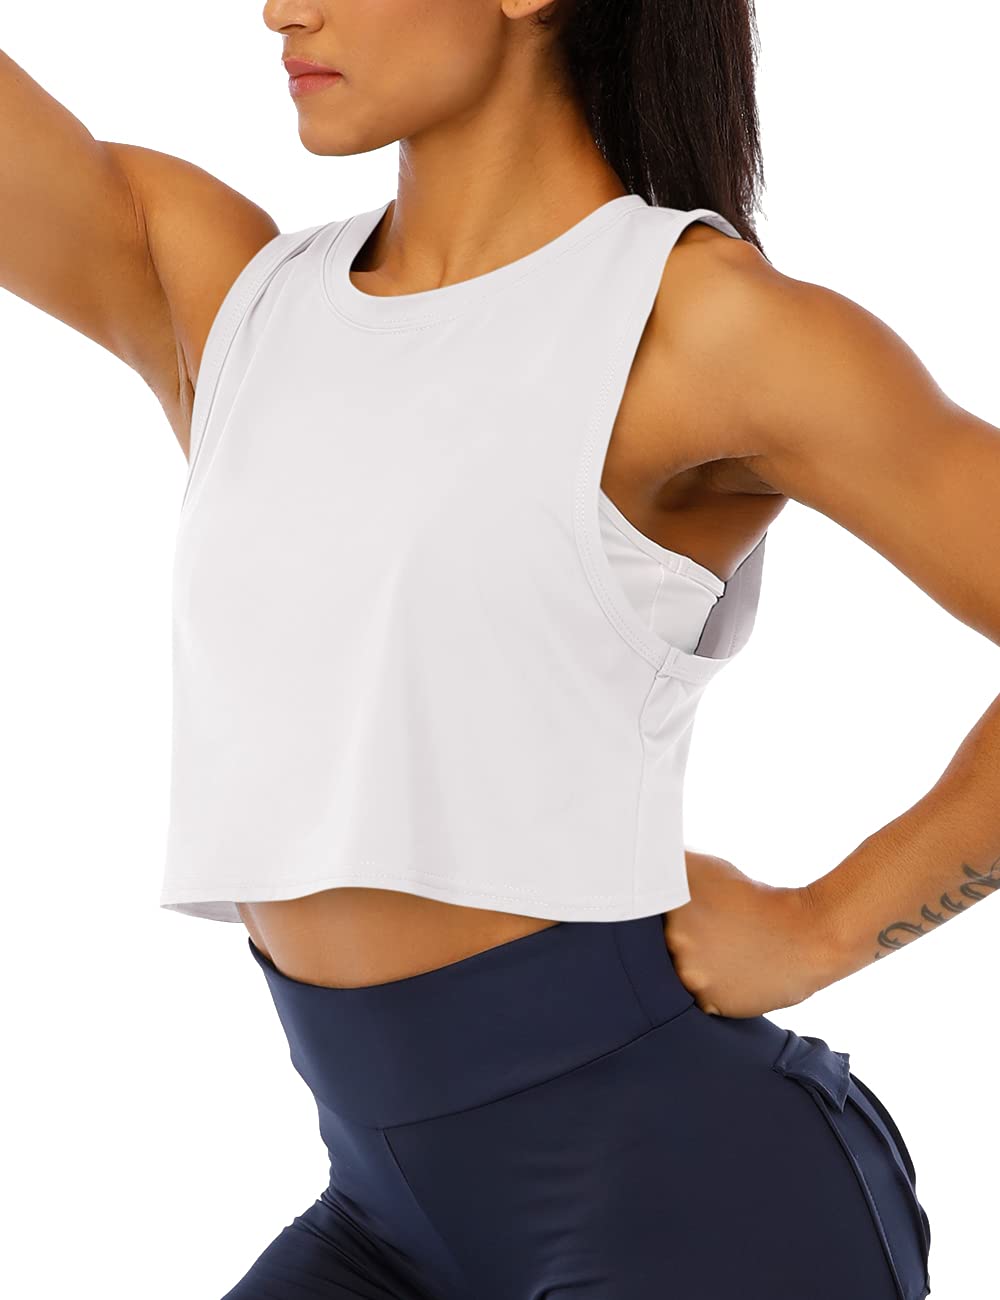 Haola Women's Loose Sleeveless Cropped Muscle Open Side Yoga Tops